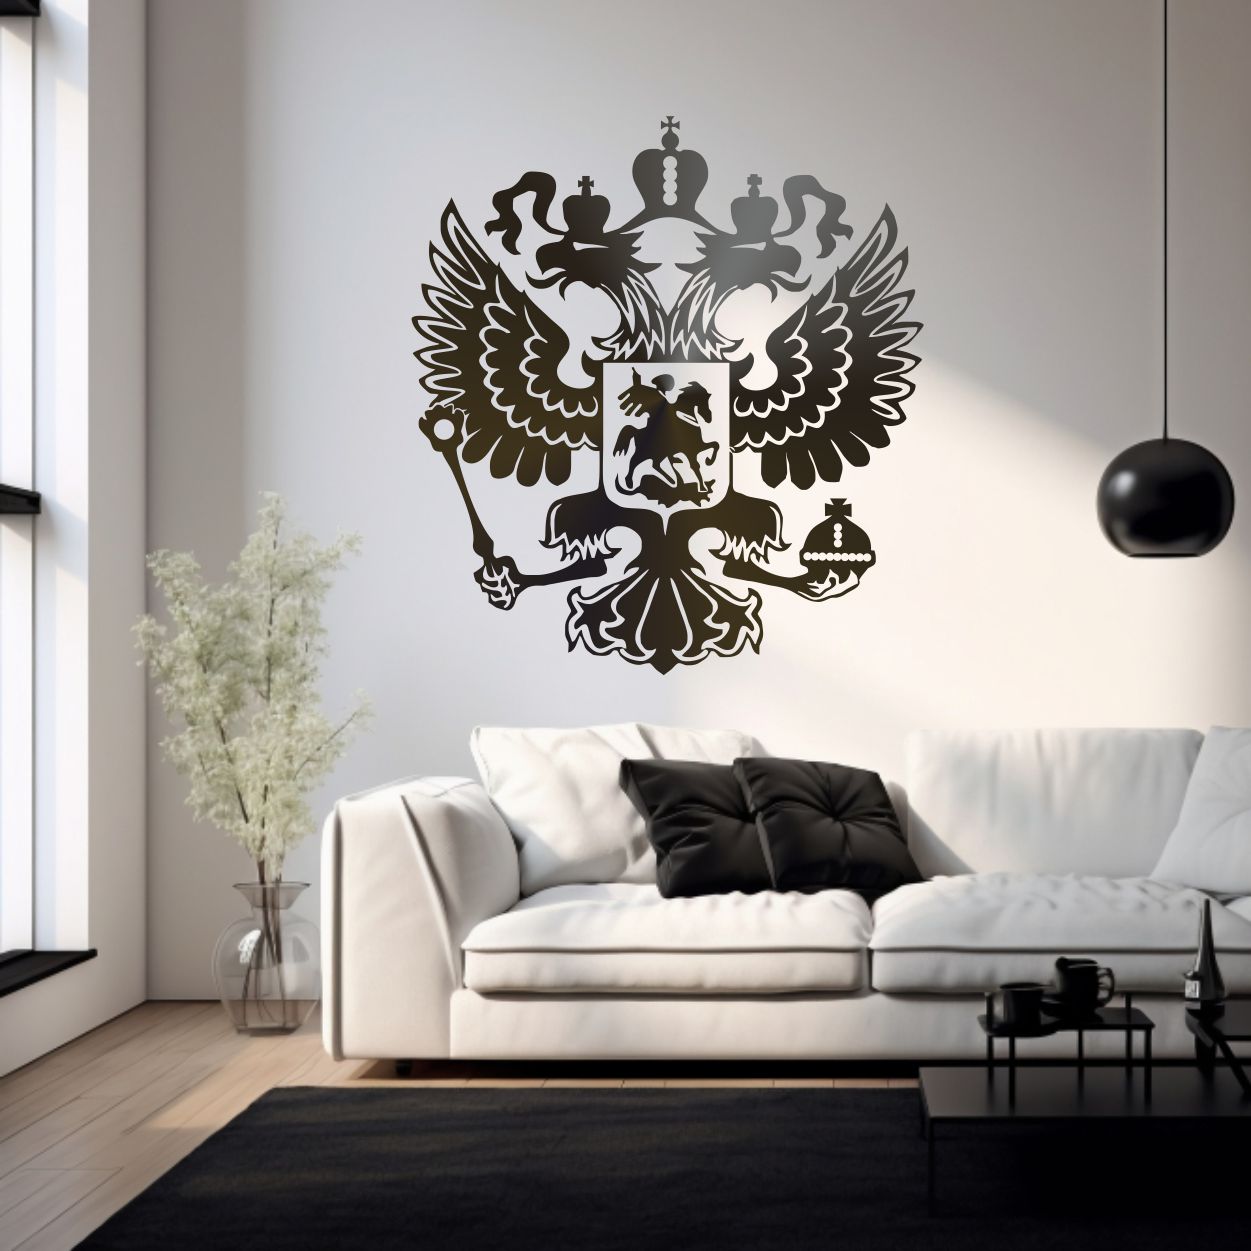 Wandtattoo Wappen Russische Föderation (Russia Coat of Arms)